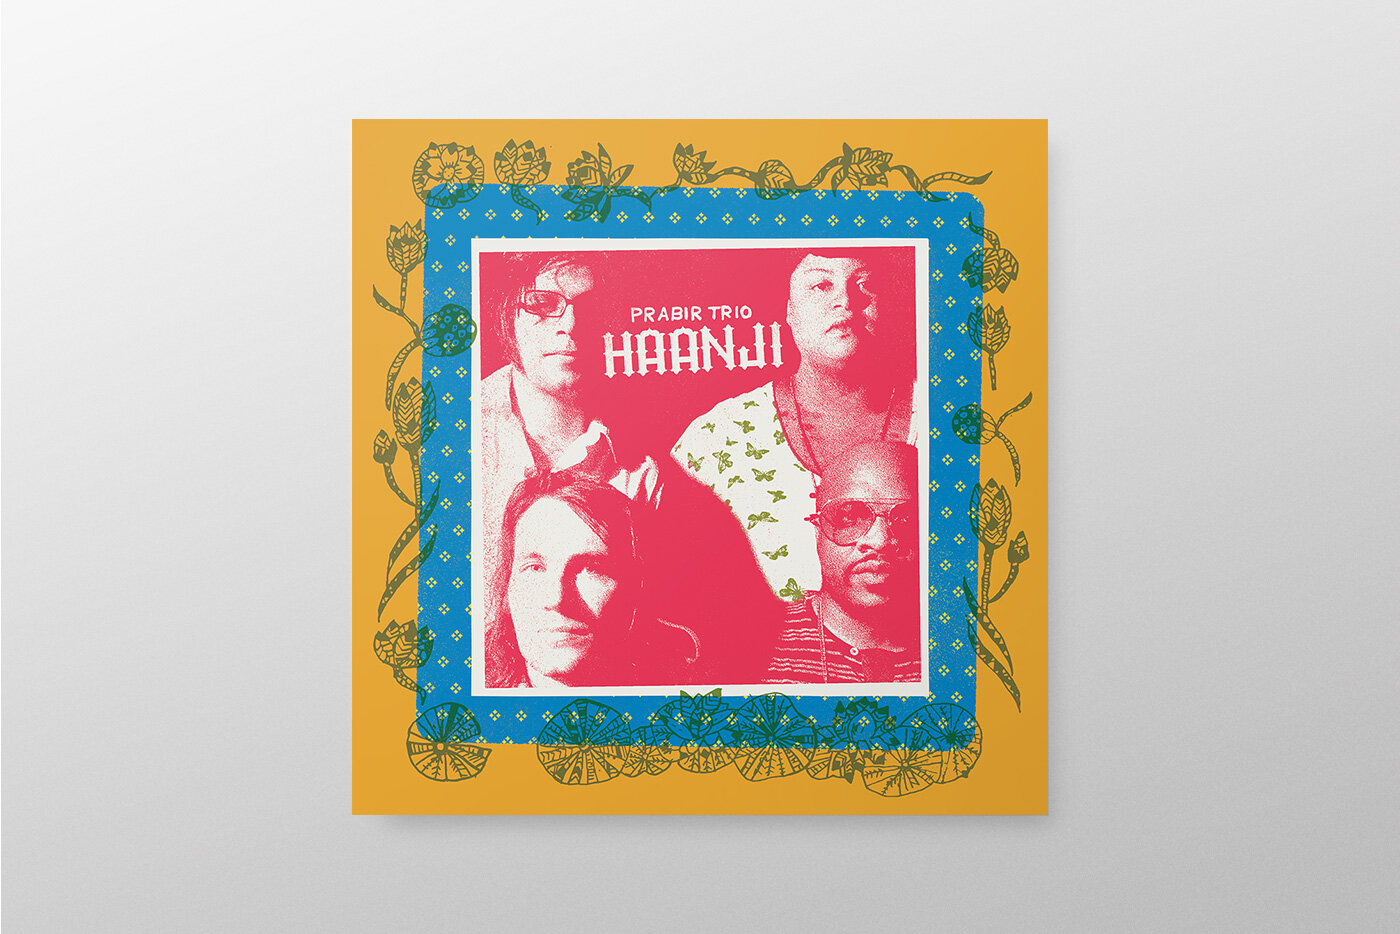 Haanji Prabir Trio Album Cover